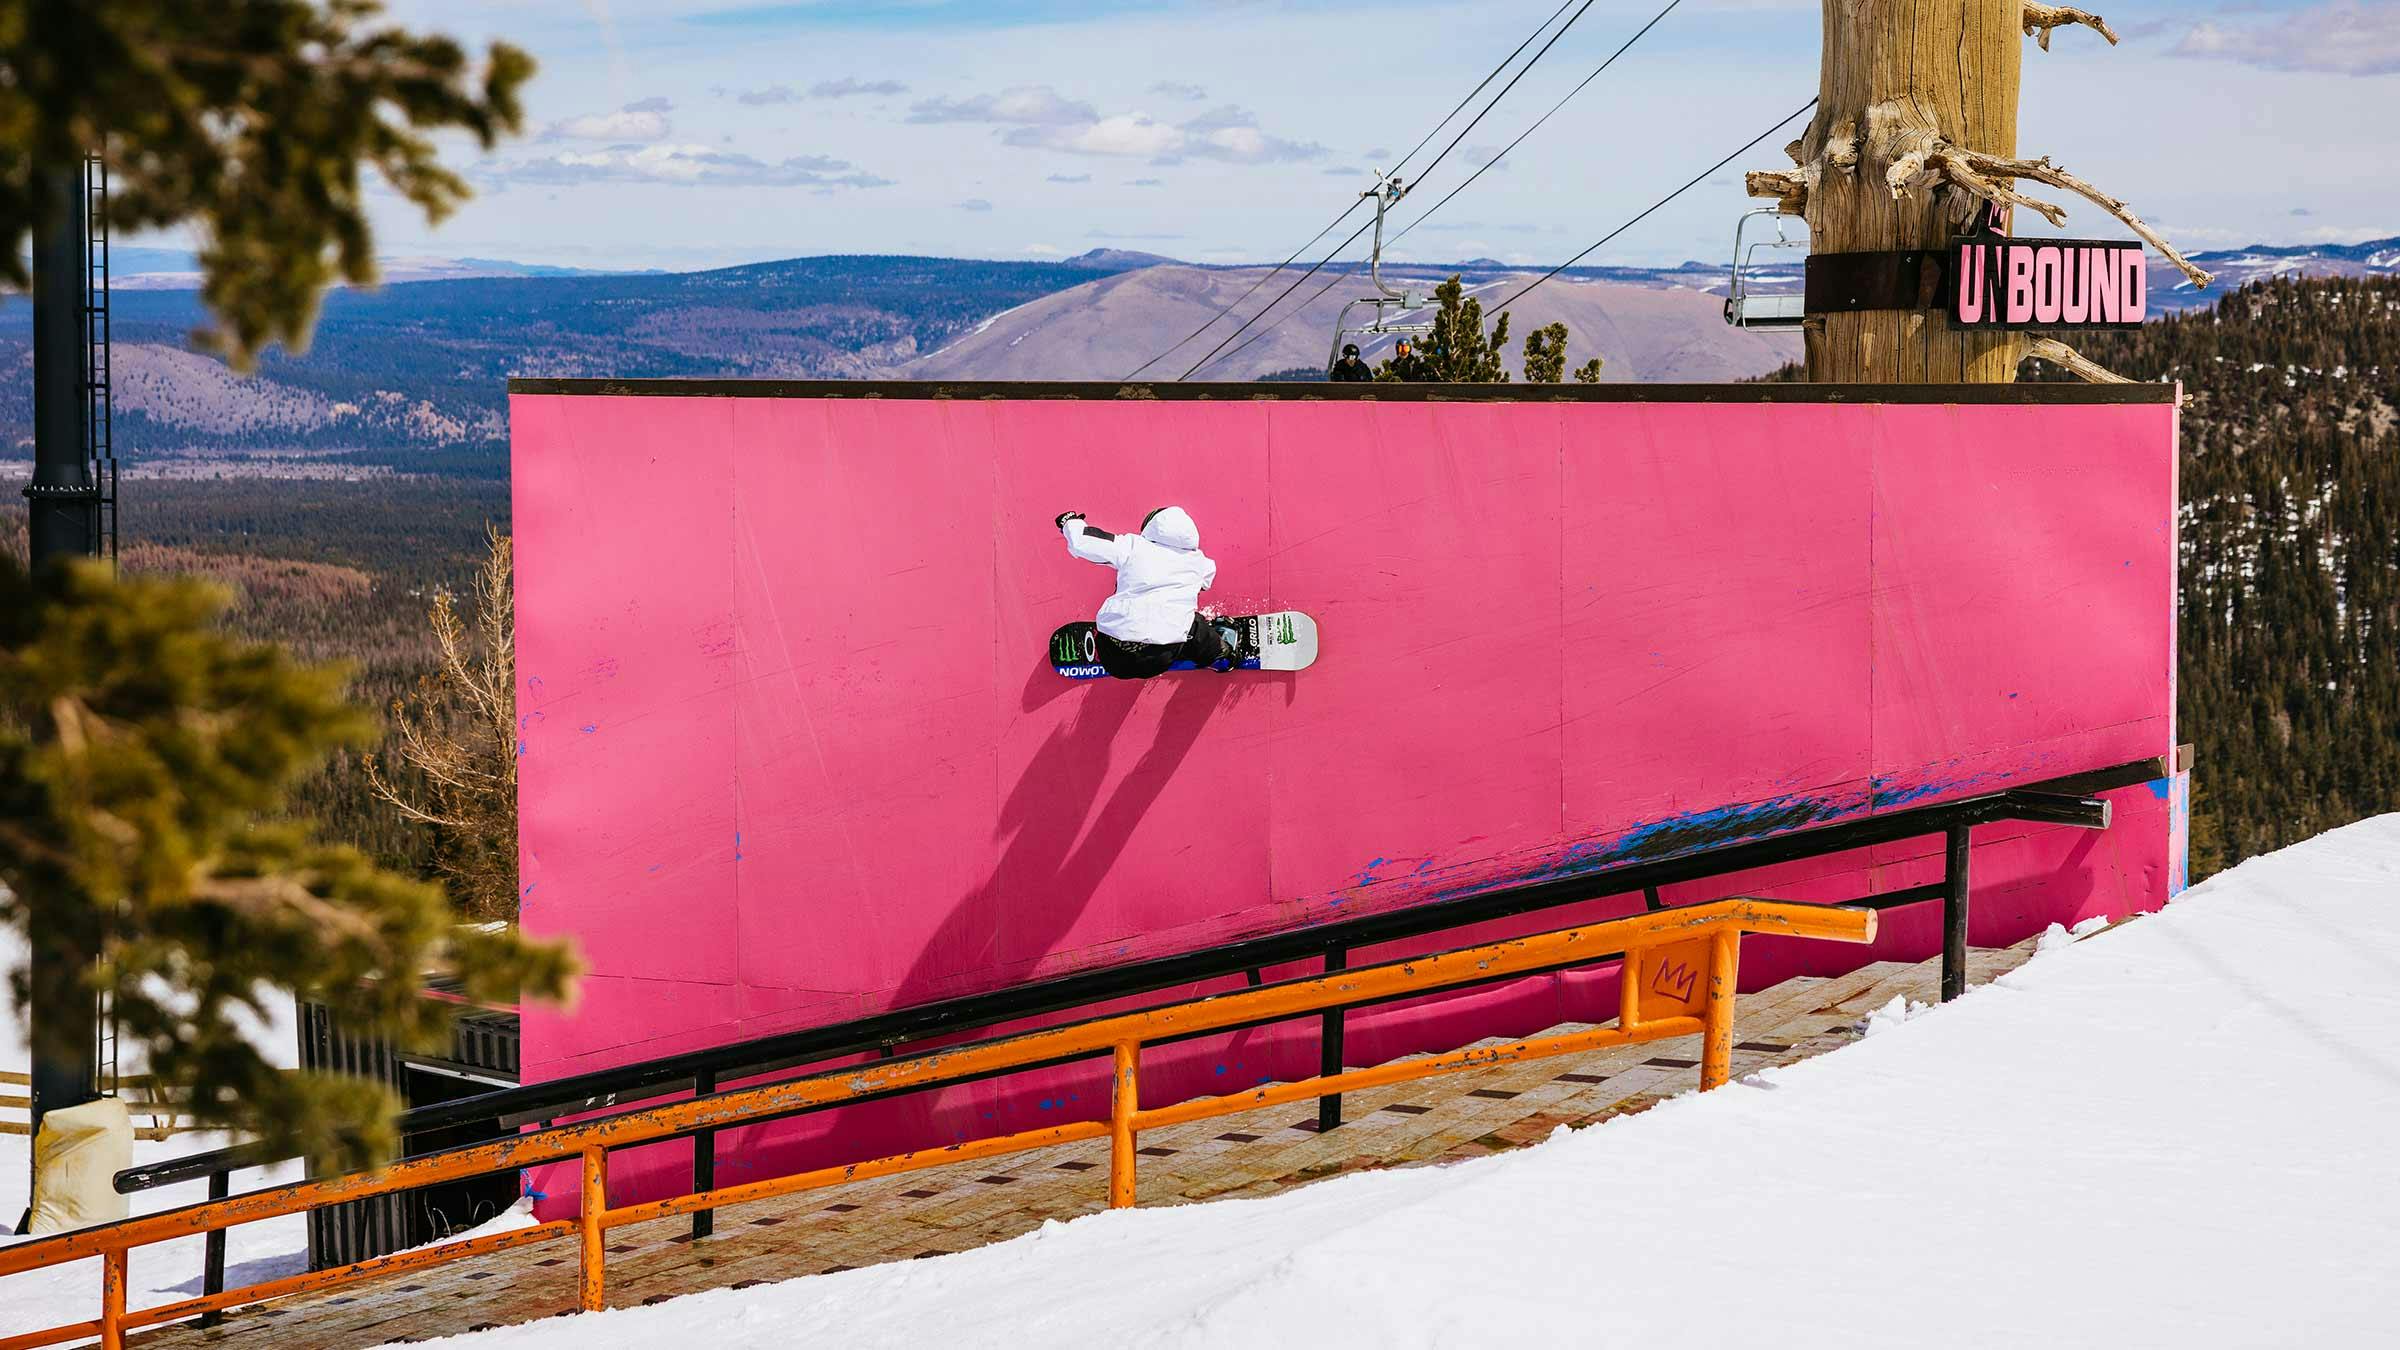 Snowboard hitting a wall ride in Main Park